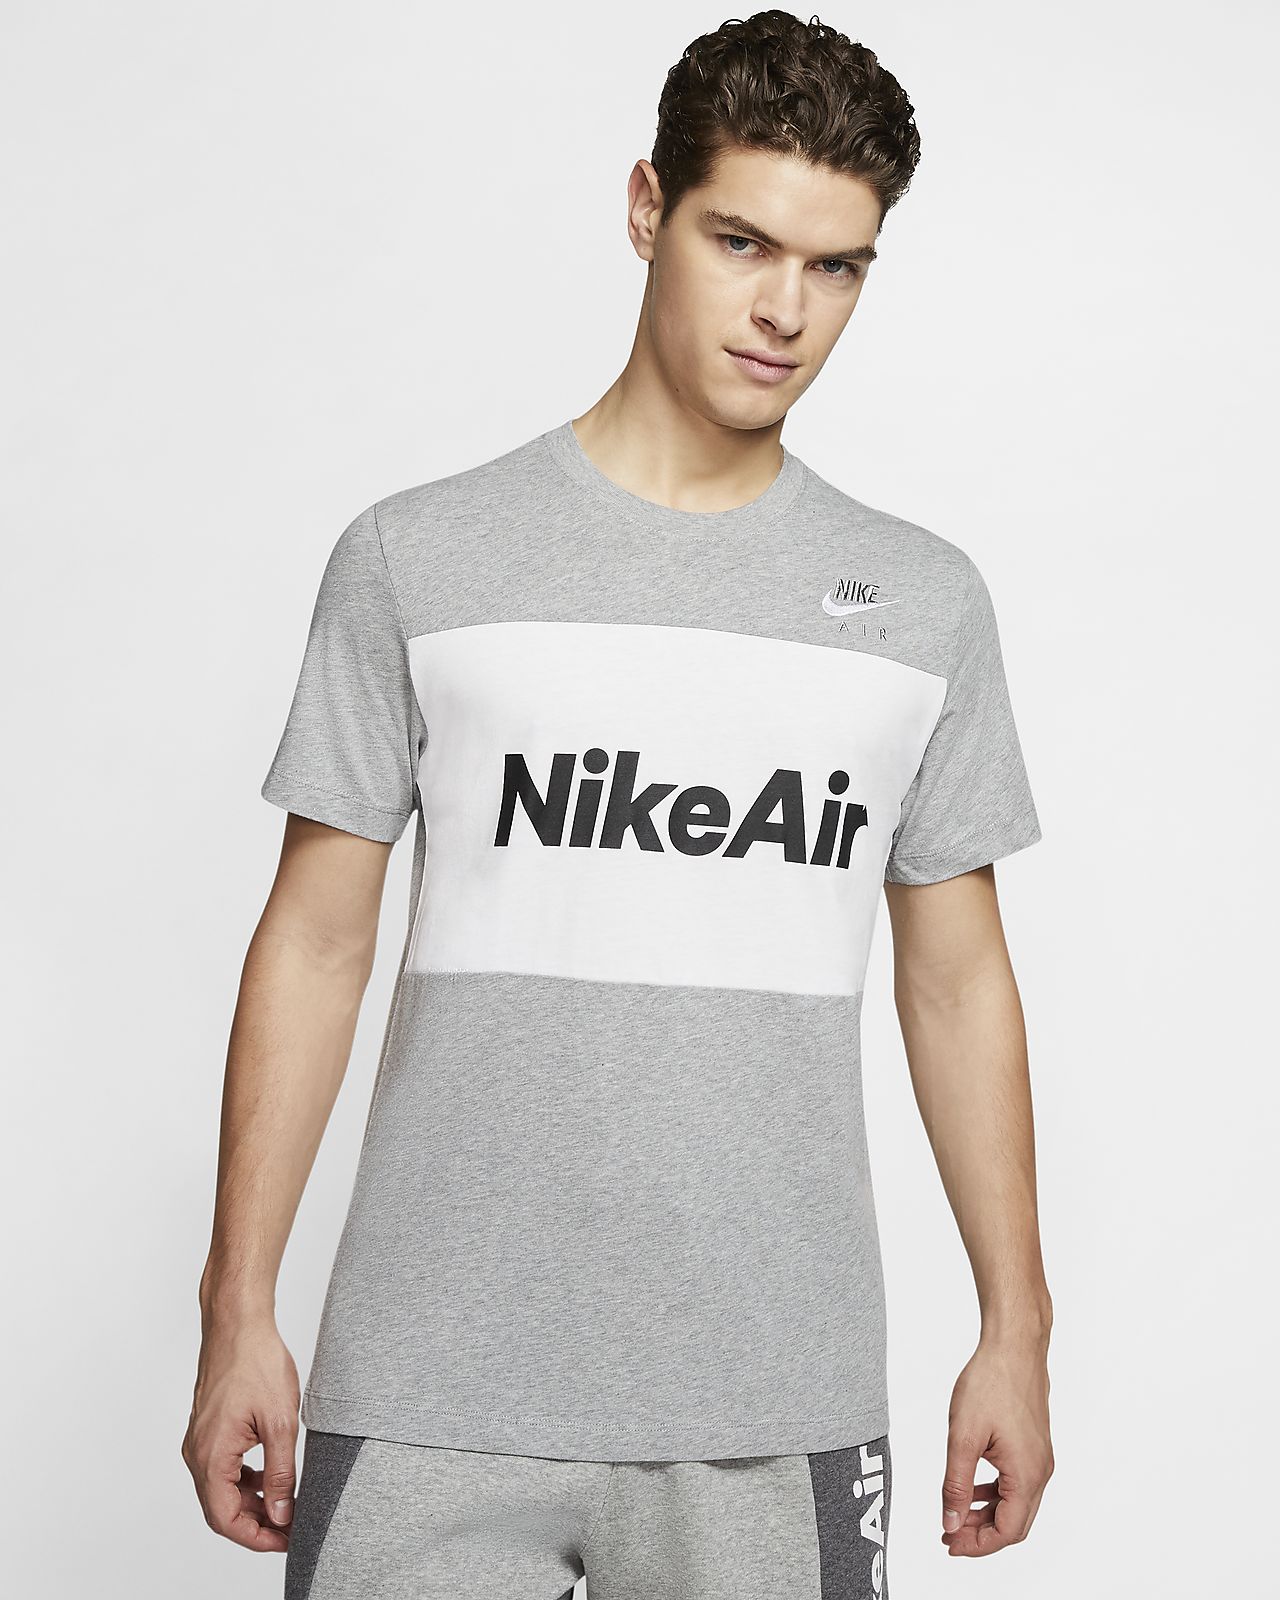 nike air grey t shirt